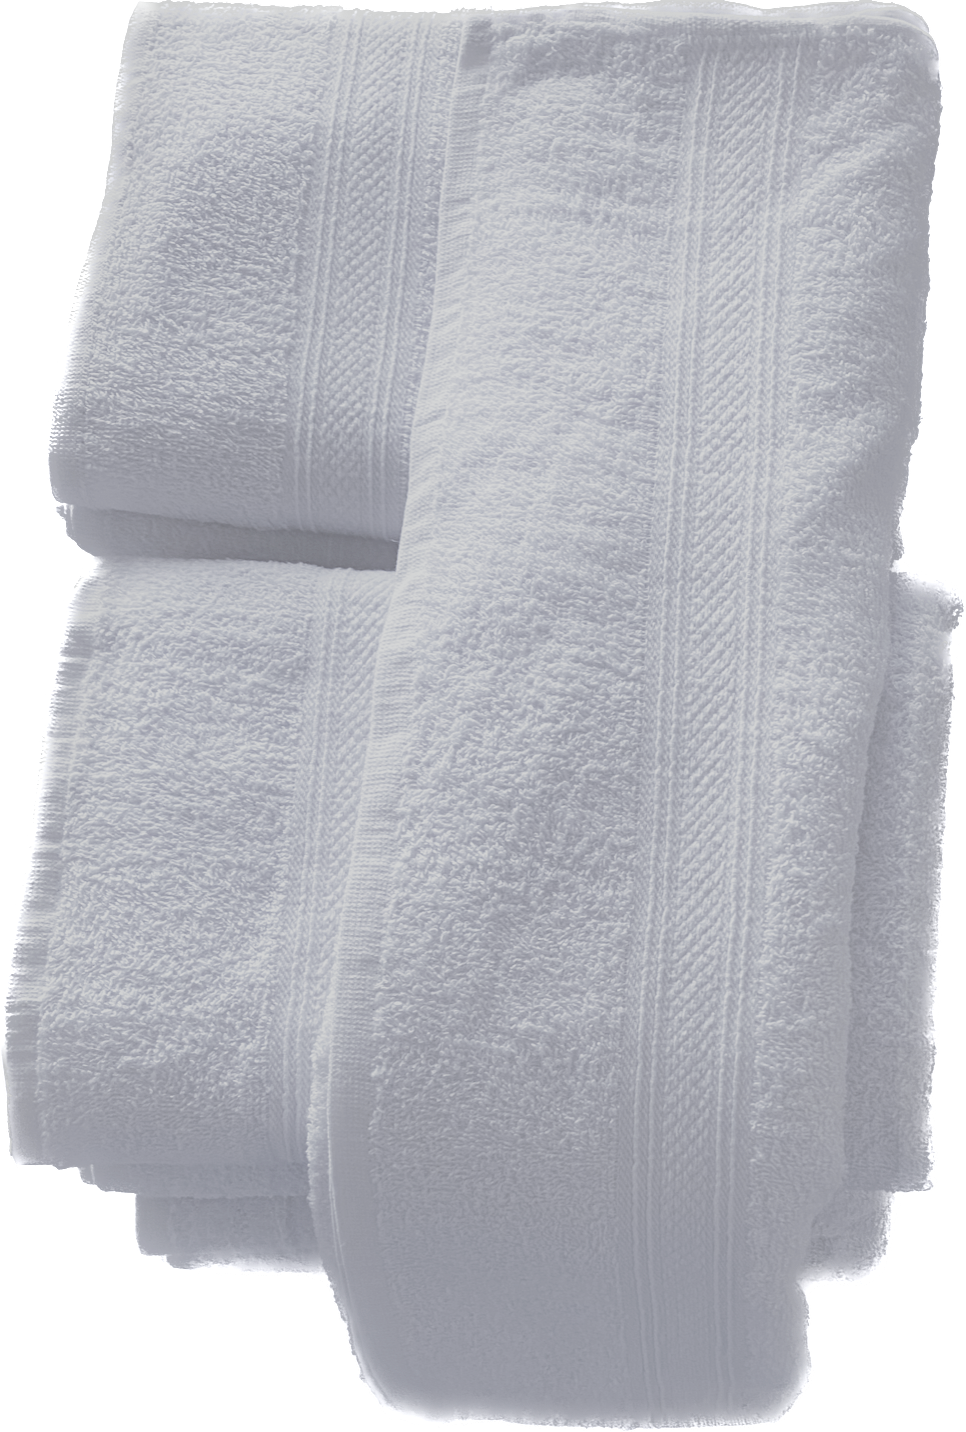 Dakota Fields 100% Cotton Bath Towels & Reviews